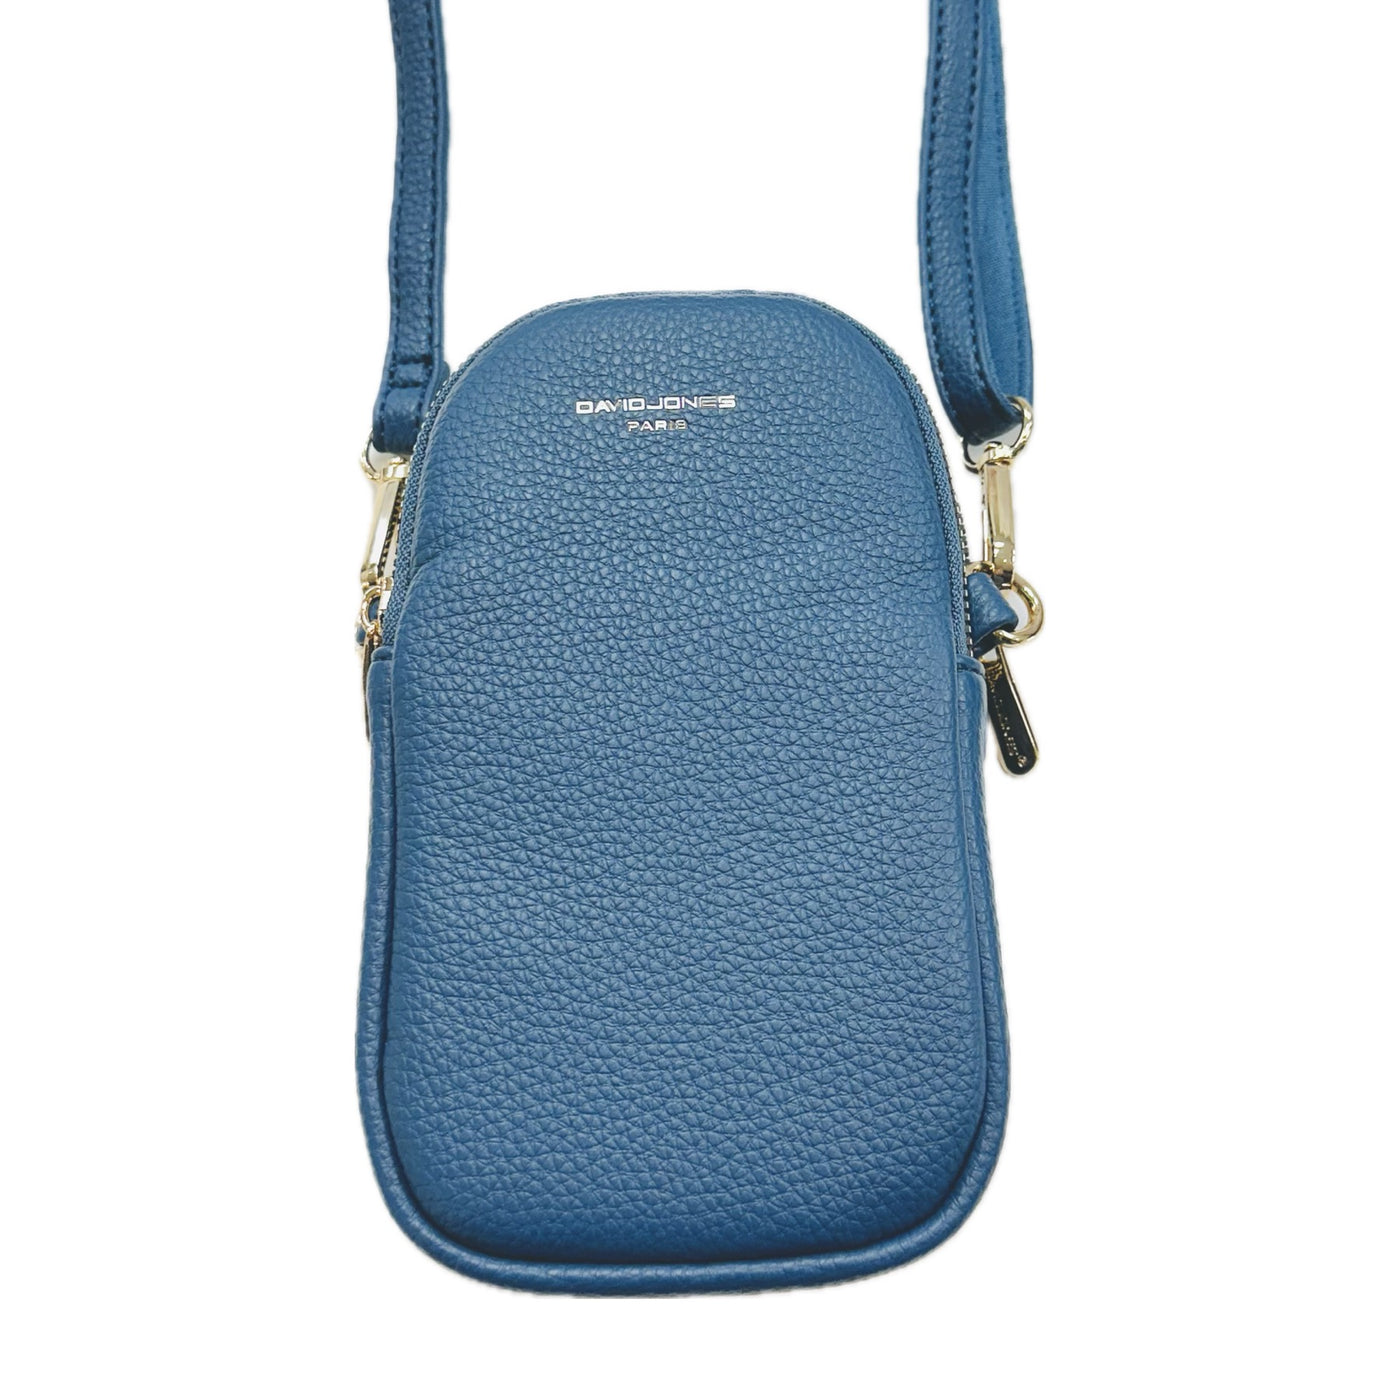 David Jones Double Zip Phone Bag - Blue/Gold Fittings (CM6814A)